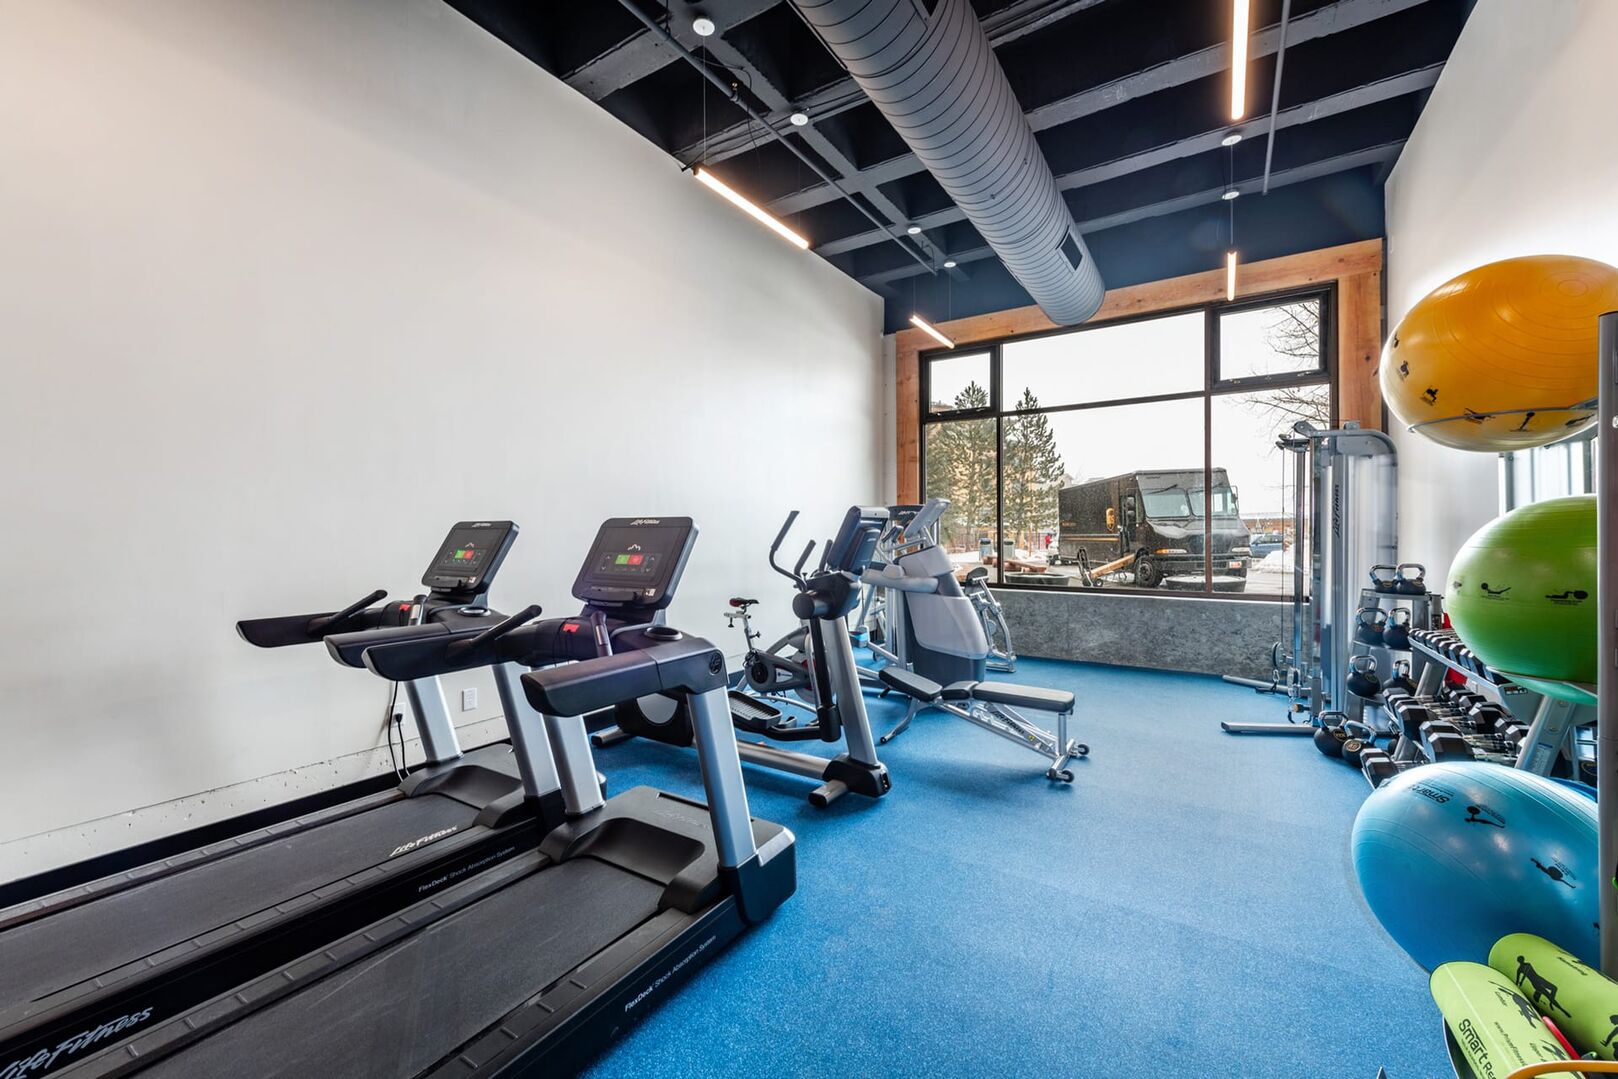 Sundial Lodge fitness room with cardio machines